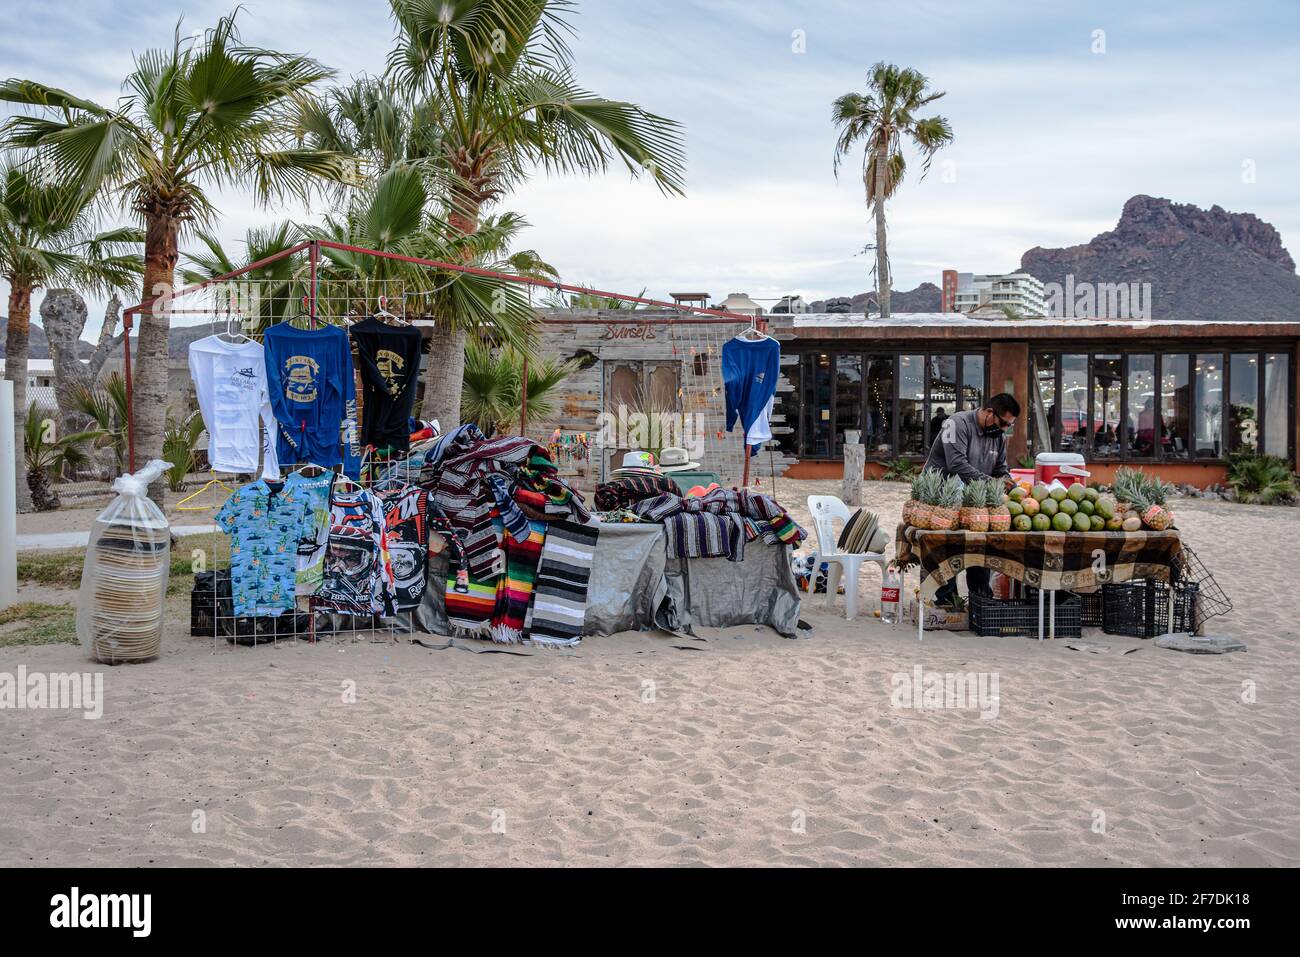 A vendor on the beach in San Carlos, Sonora, Mexico sells souvenirs. Stock Photo